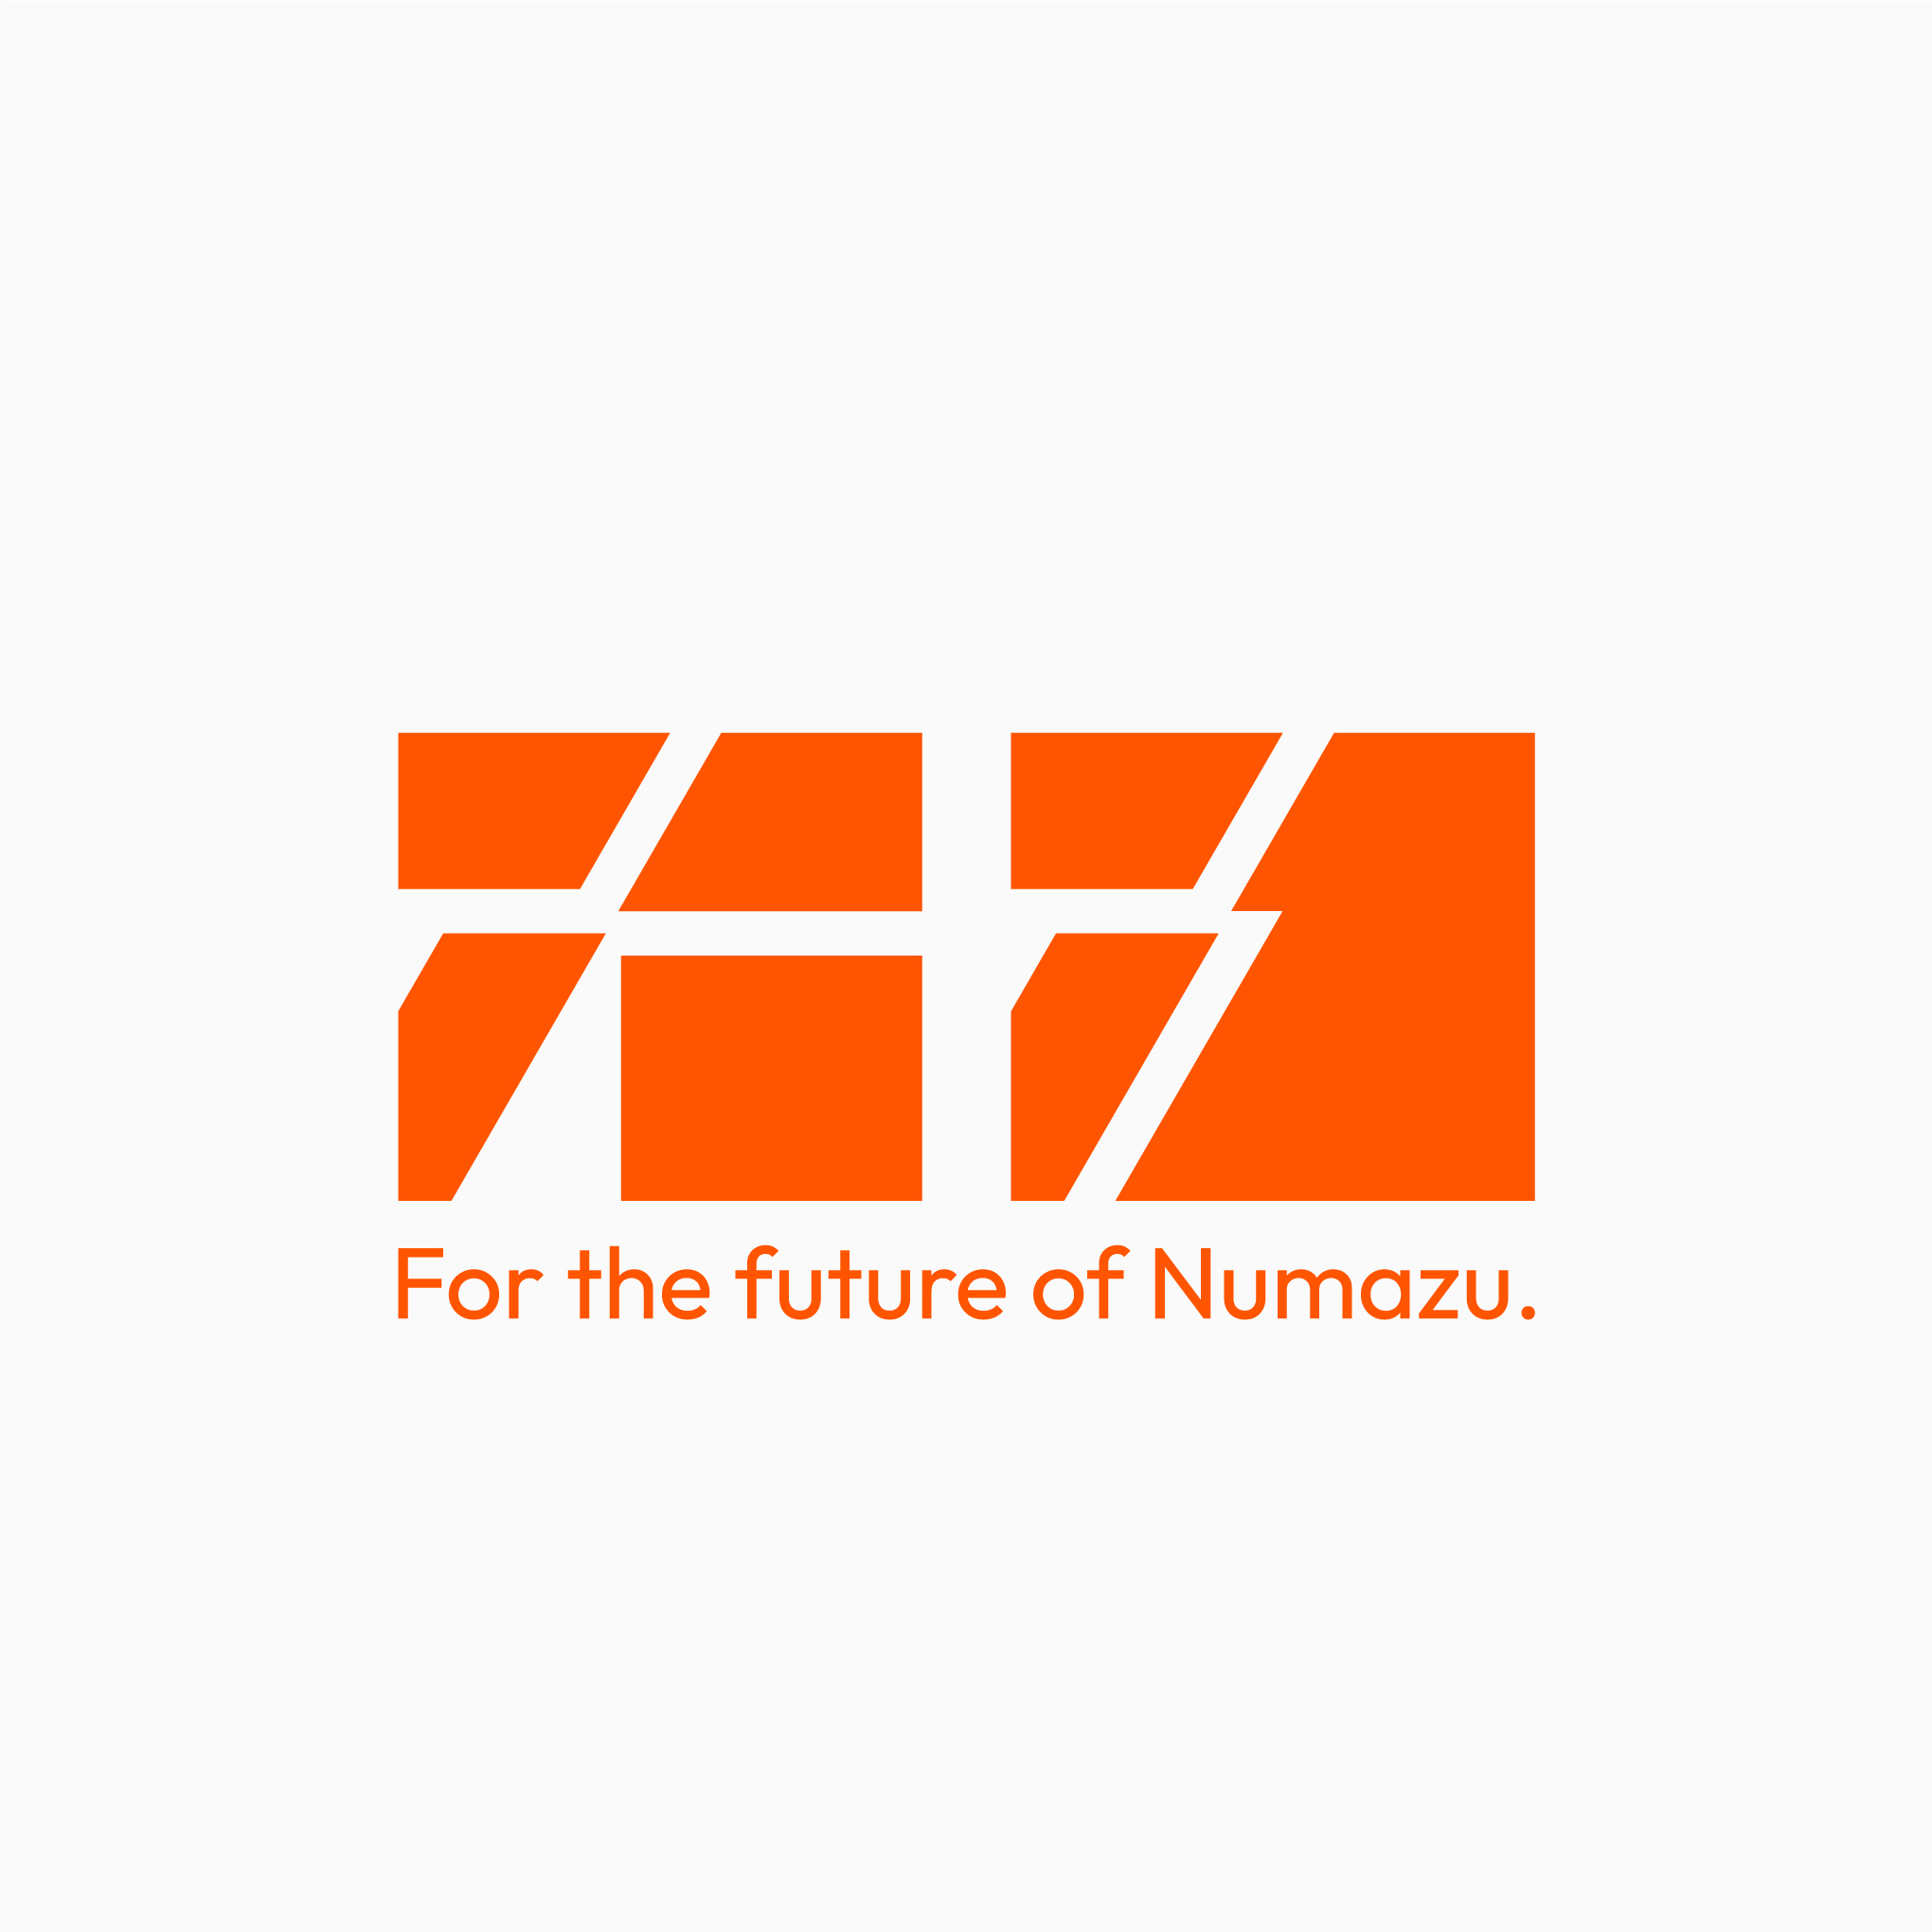 For the future of Numazu.